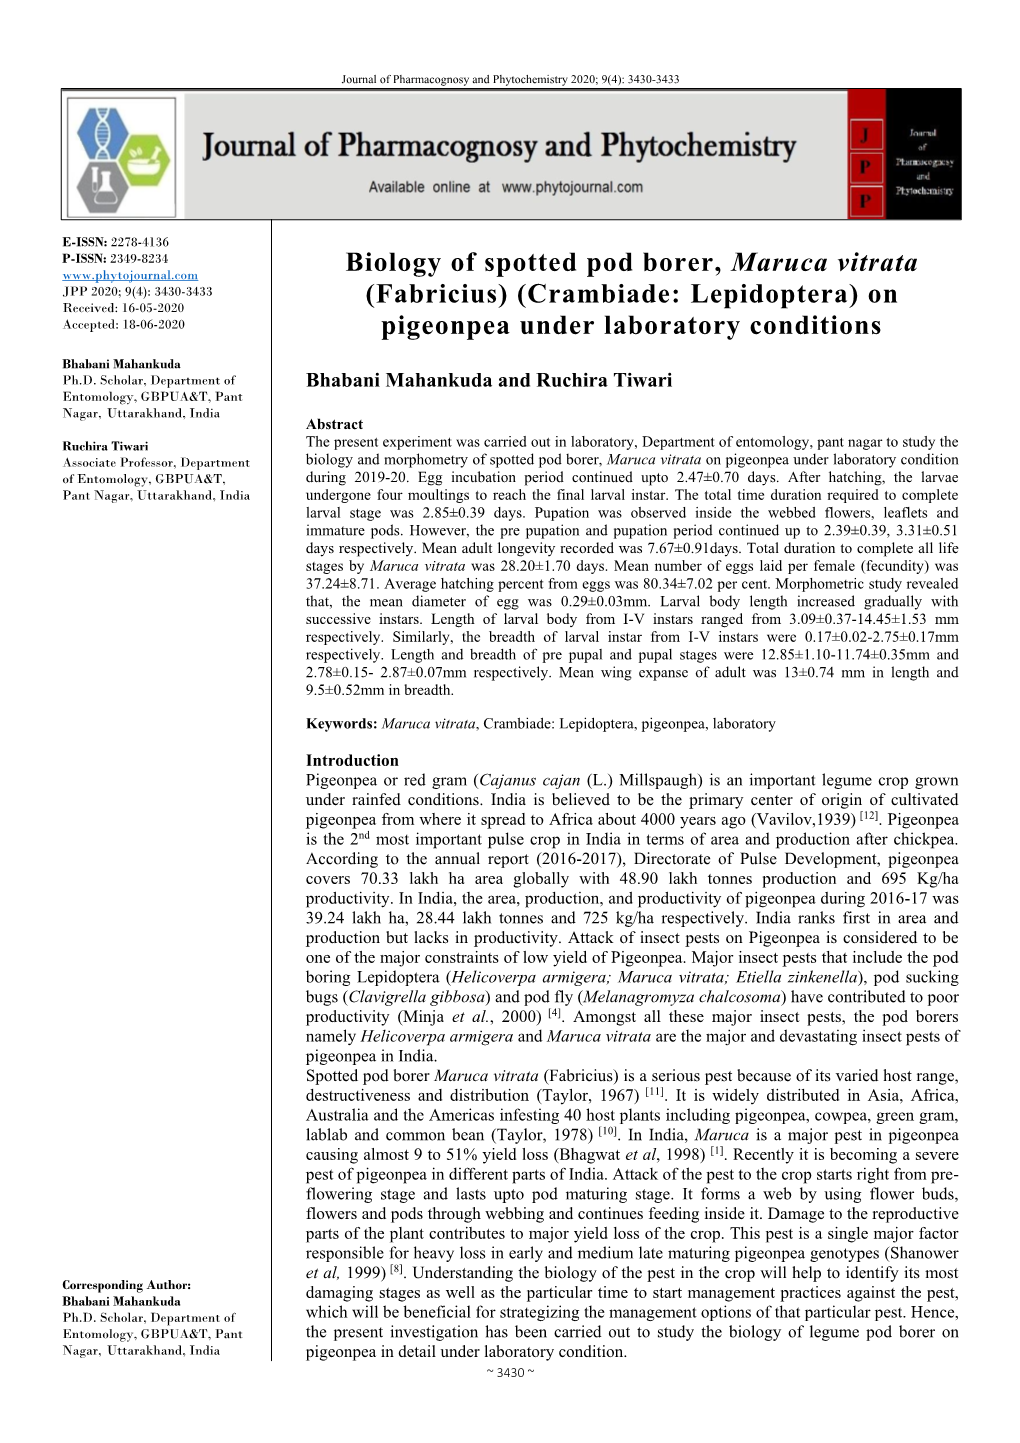 Biology of Spotted Pod Borer, Maruca Vitrata (Fabricius)